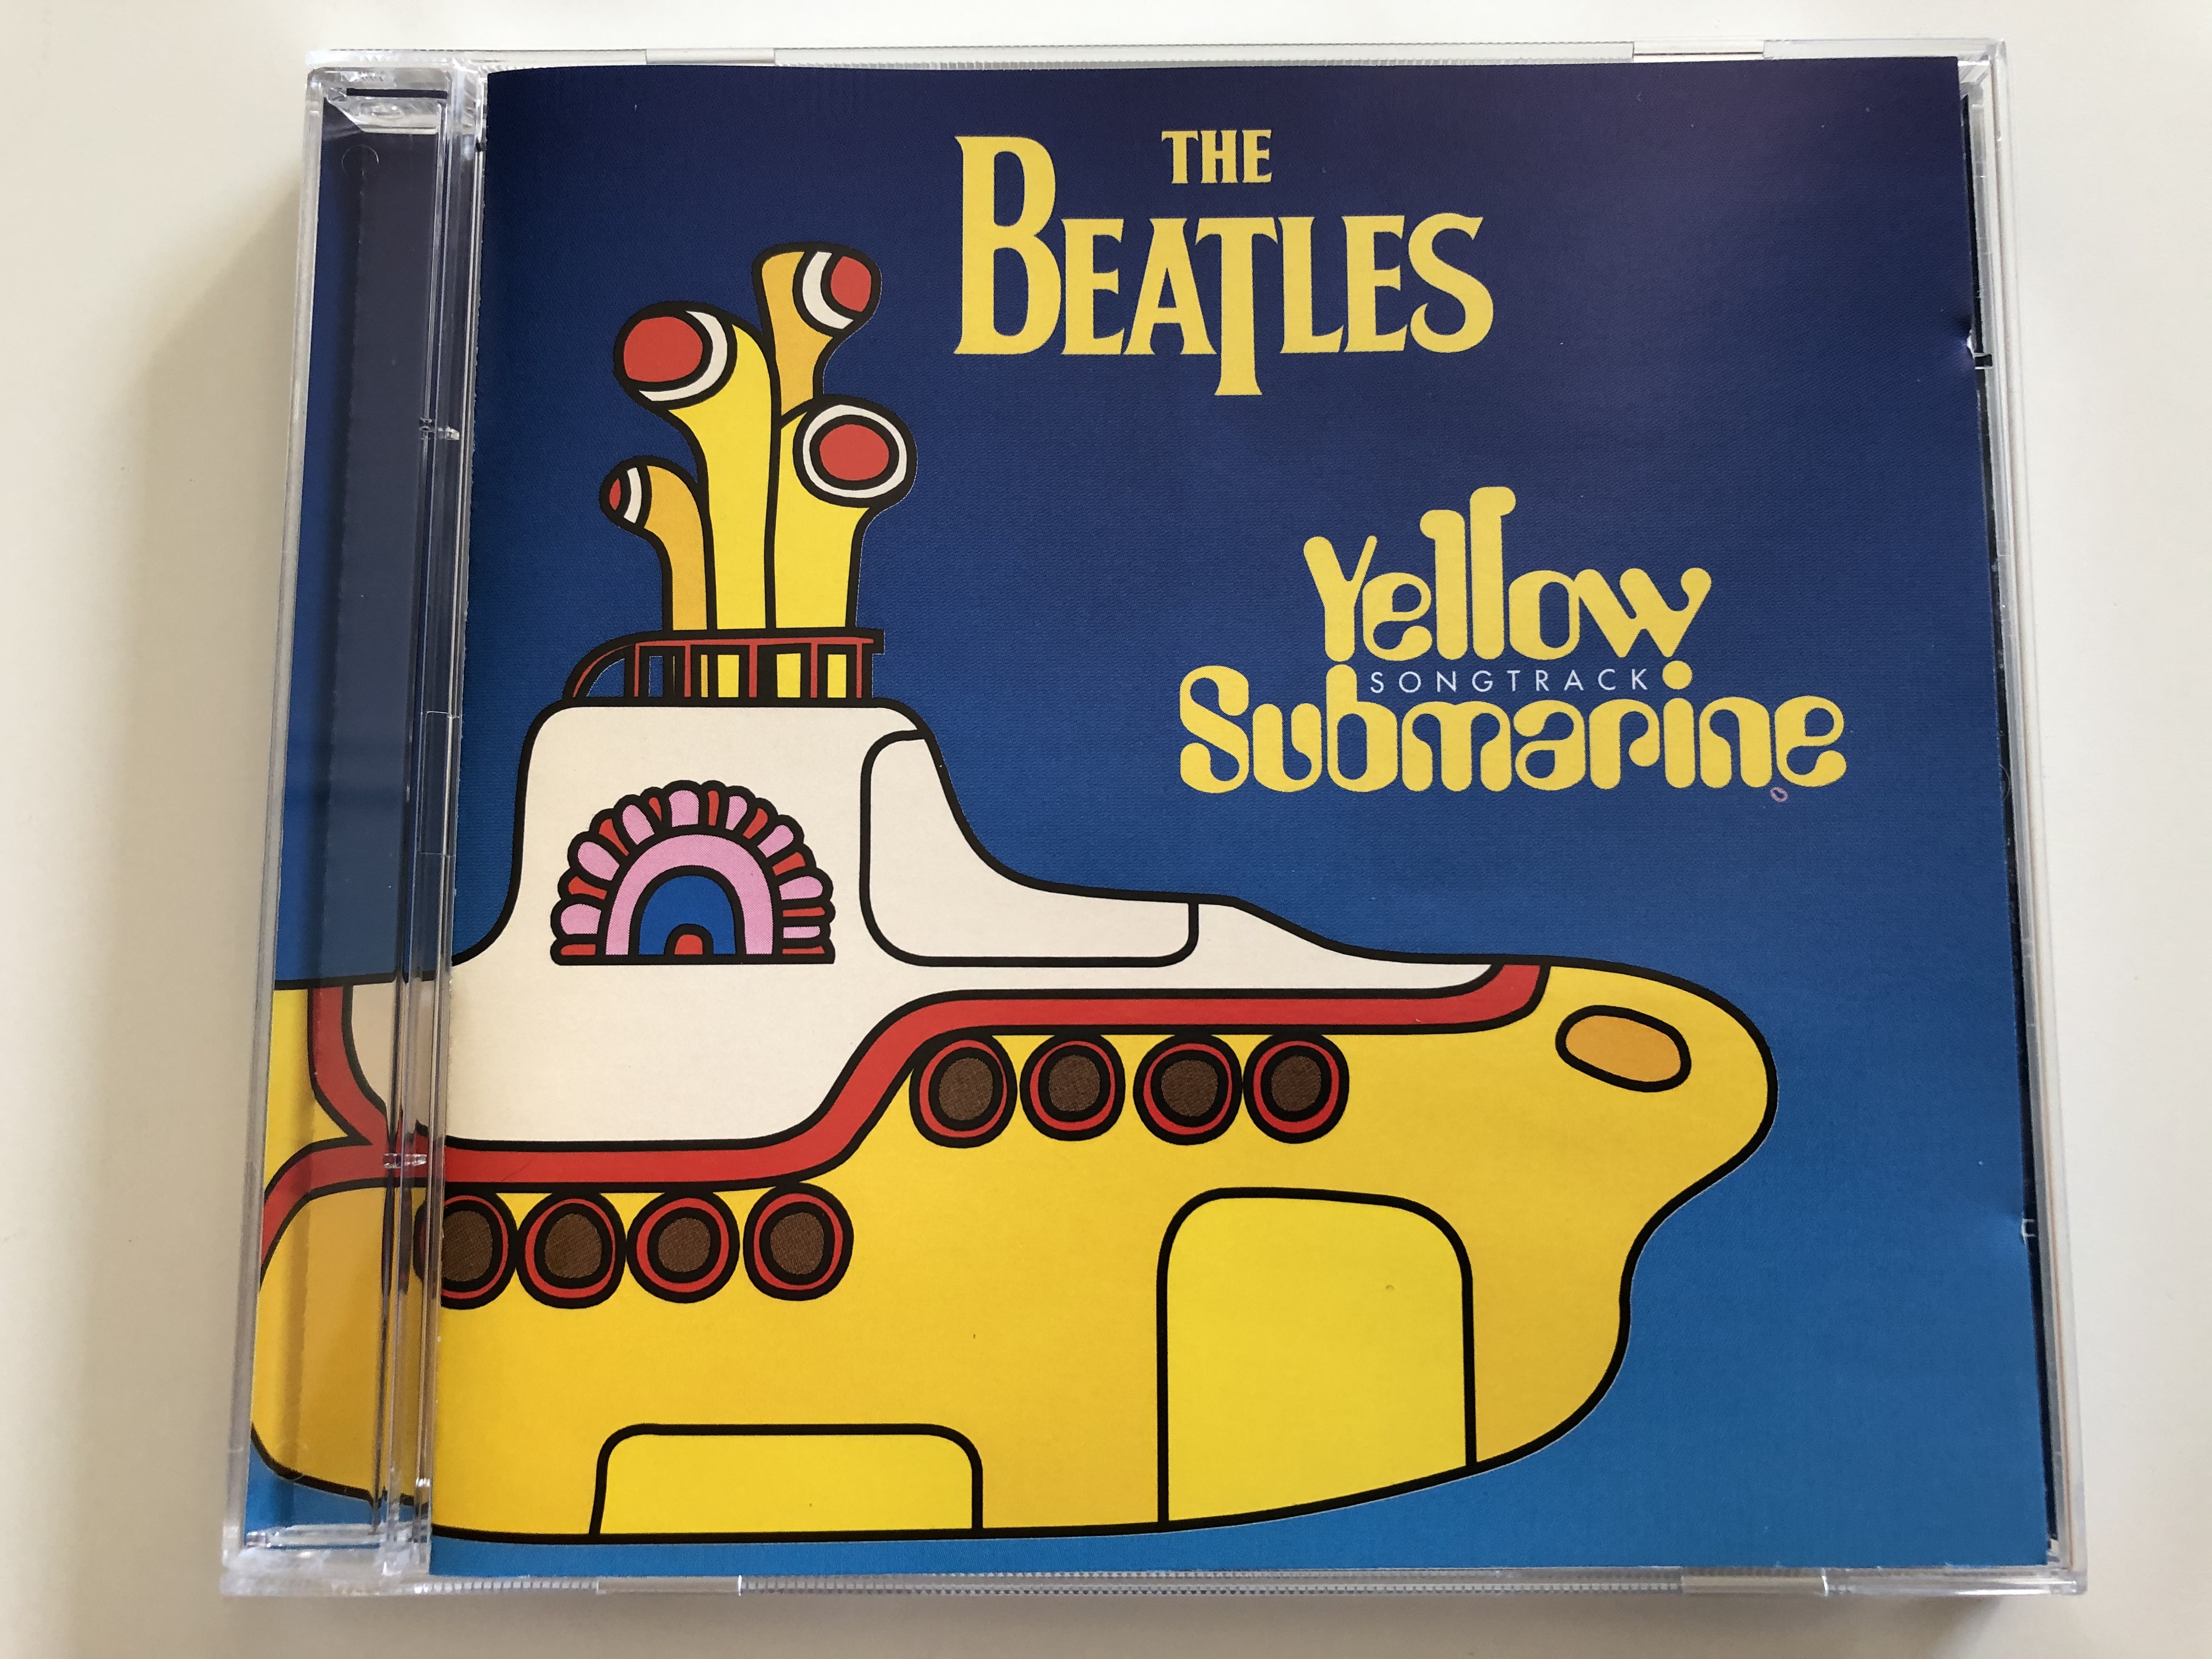 the-beatles-yellow-submarine-songtrack-apple-records-audio-cd-1999-724352148127-1-.jpg